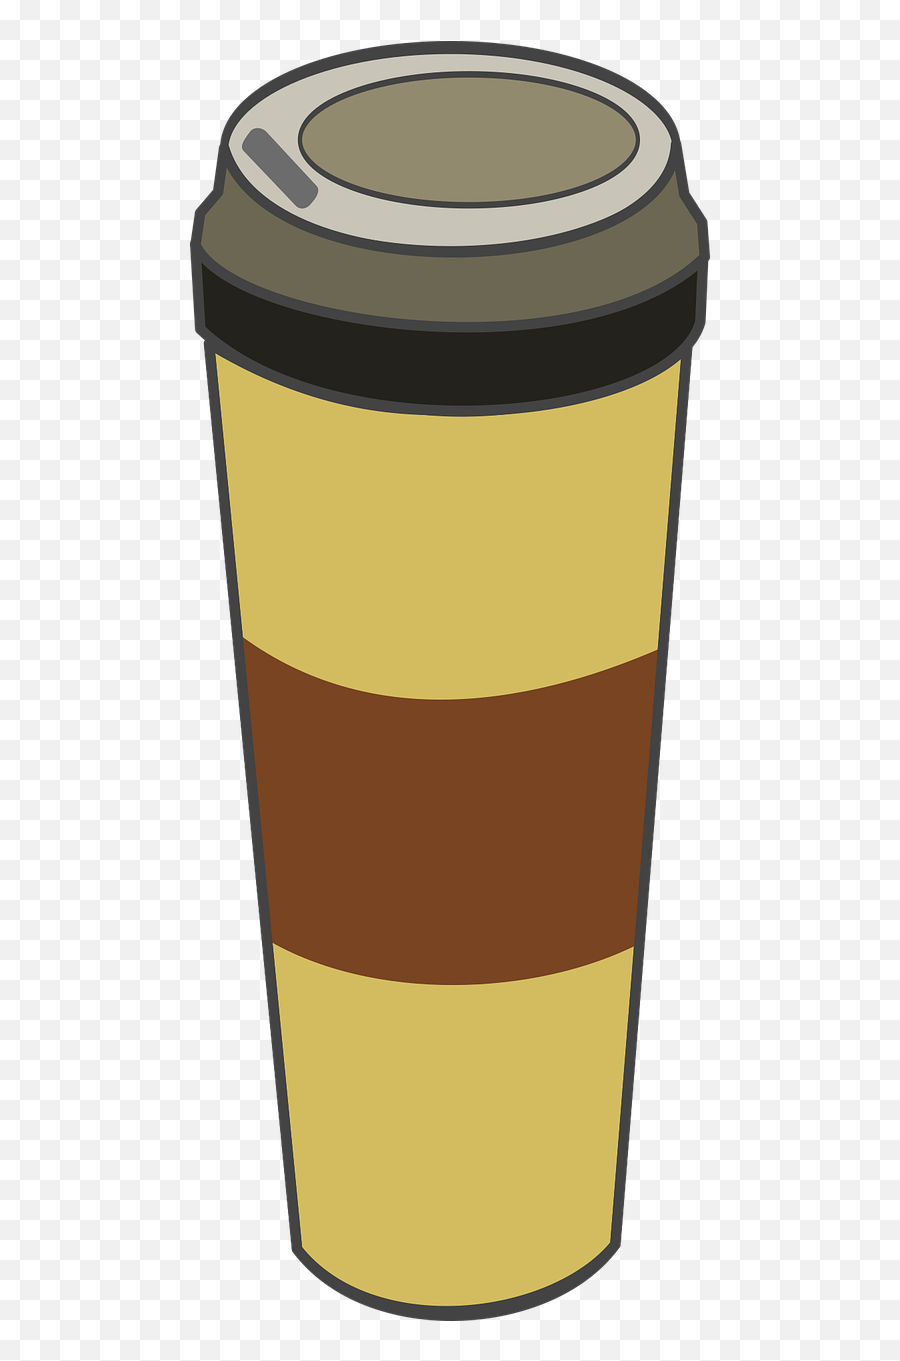 Coffee Cup Mug Starbucks - Free Image On Pixabay Pint Glass Png,Starbucks Coffee Transparent